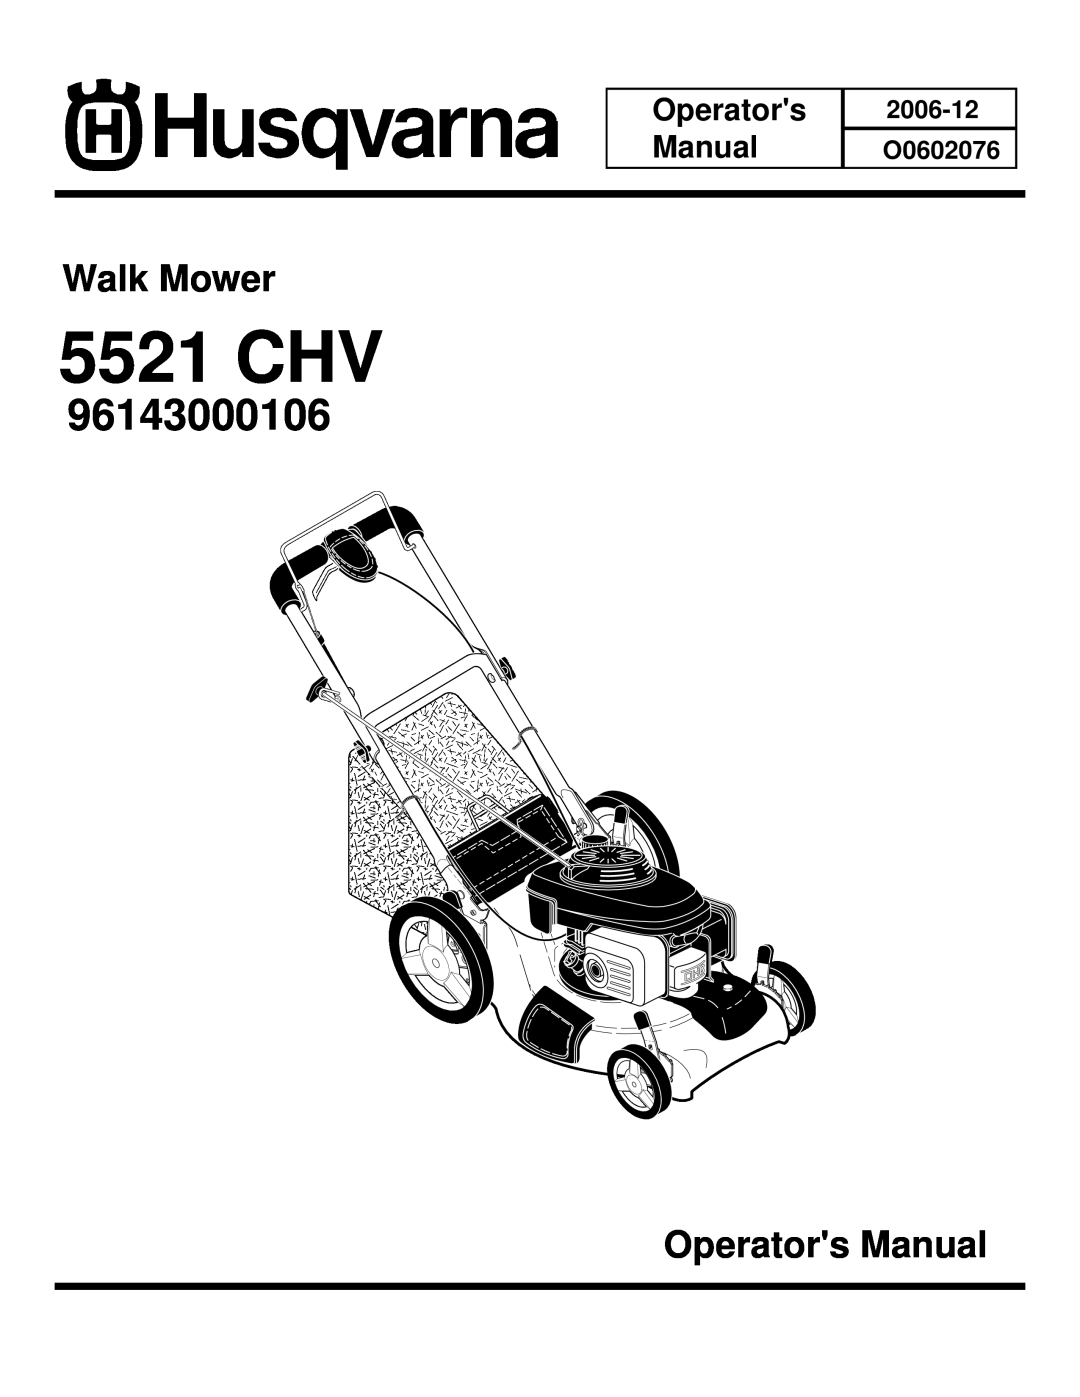 Husqvarna 5521 CHV 96143000106 manual Walk Mower, Operators Manual, 2006-12 O0602076 